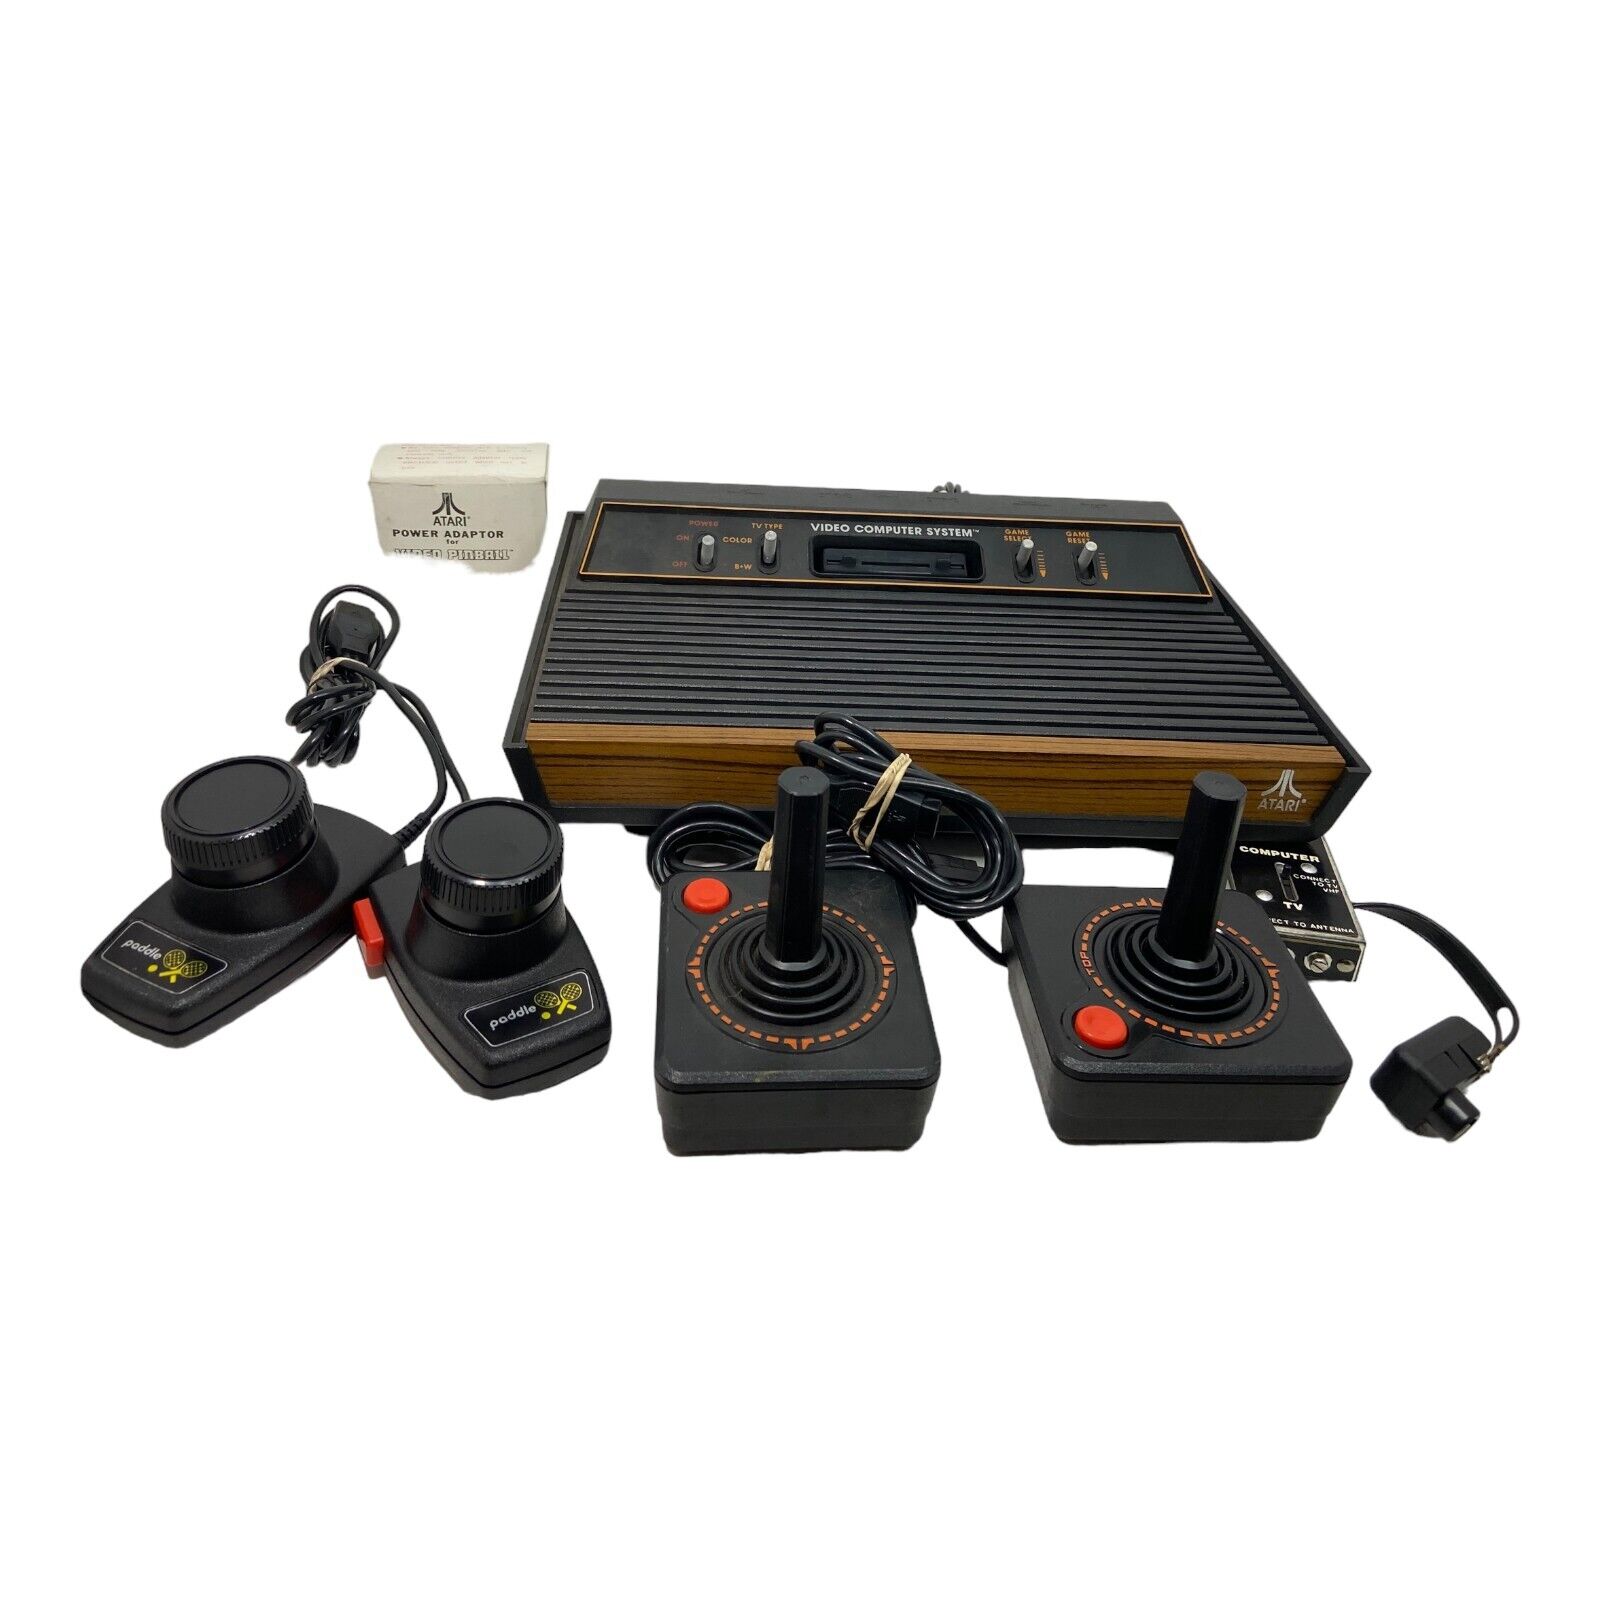 🐞 Vintage - 1982 ATARI 2600 Video Computer System WORKS COMPLETE - FL